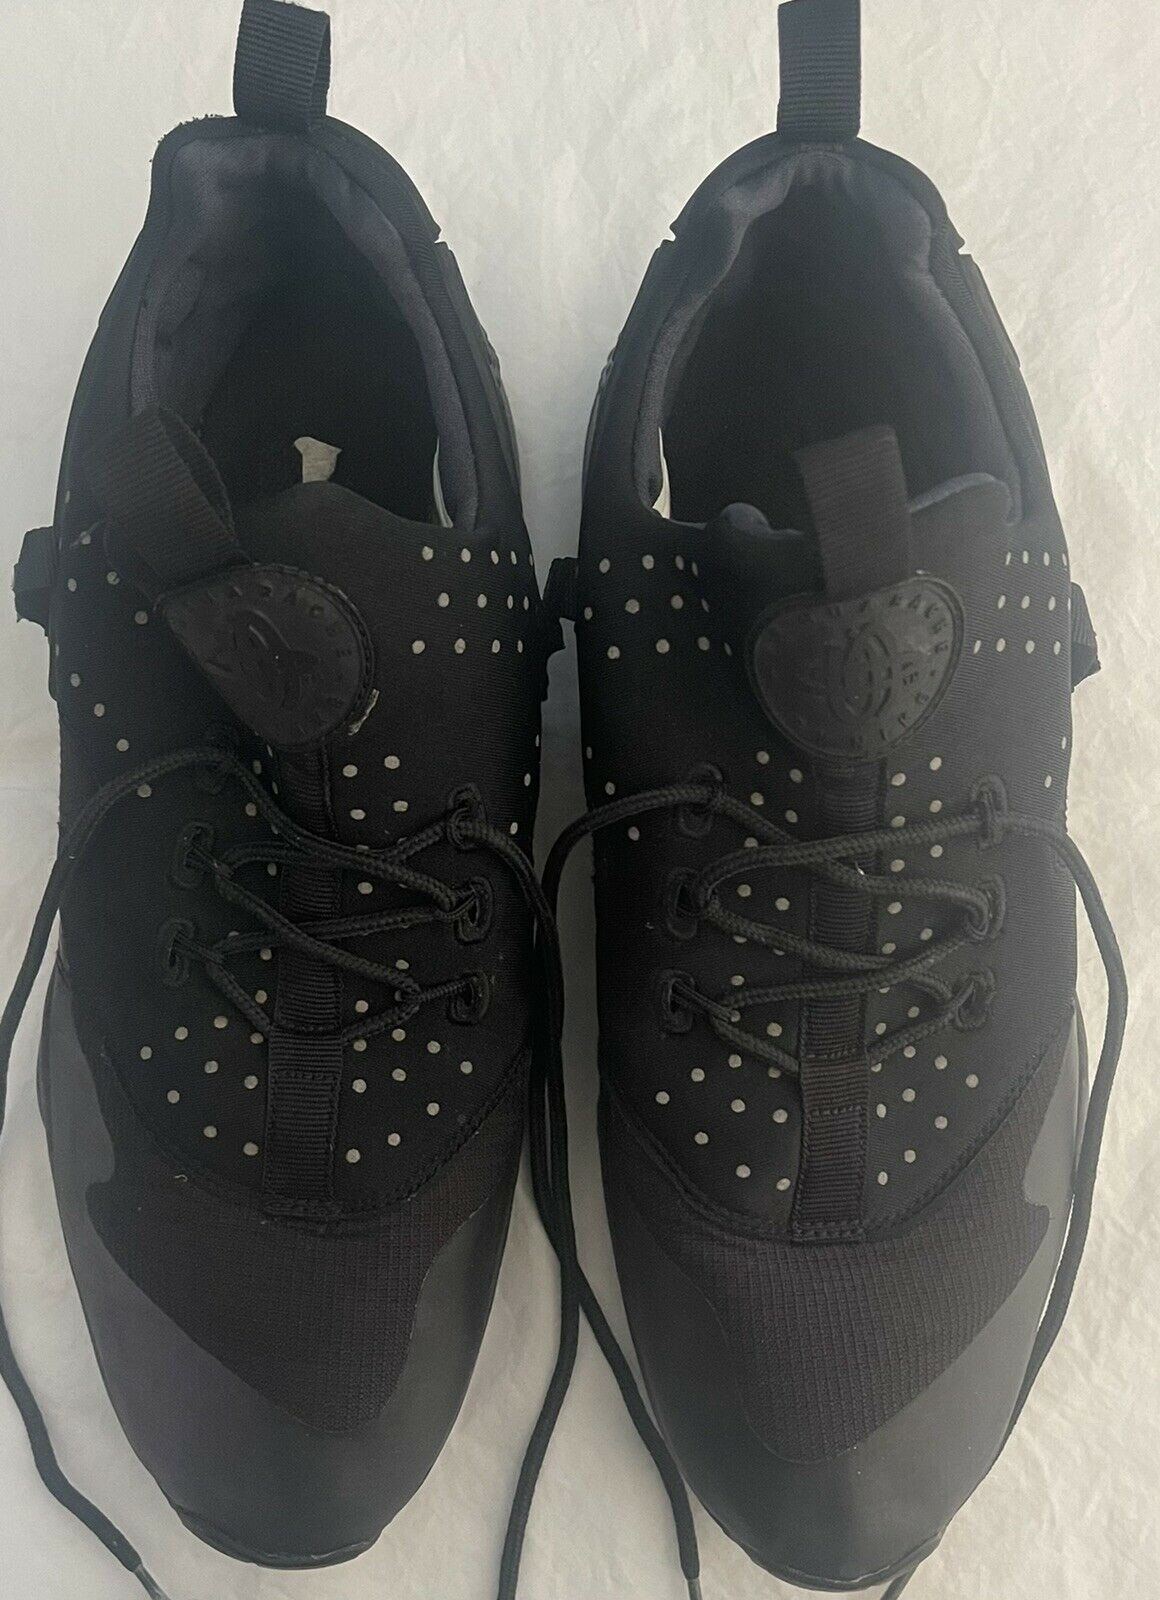 Men’s NIKE Air Huarache Black Shoes Size 11.5 FREE SHIPPING